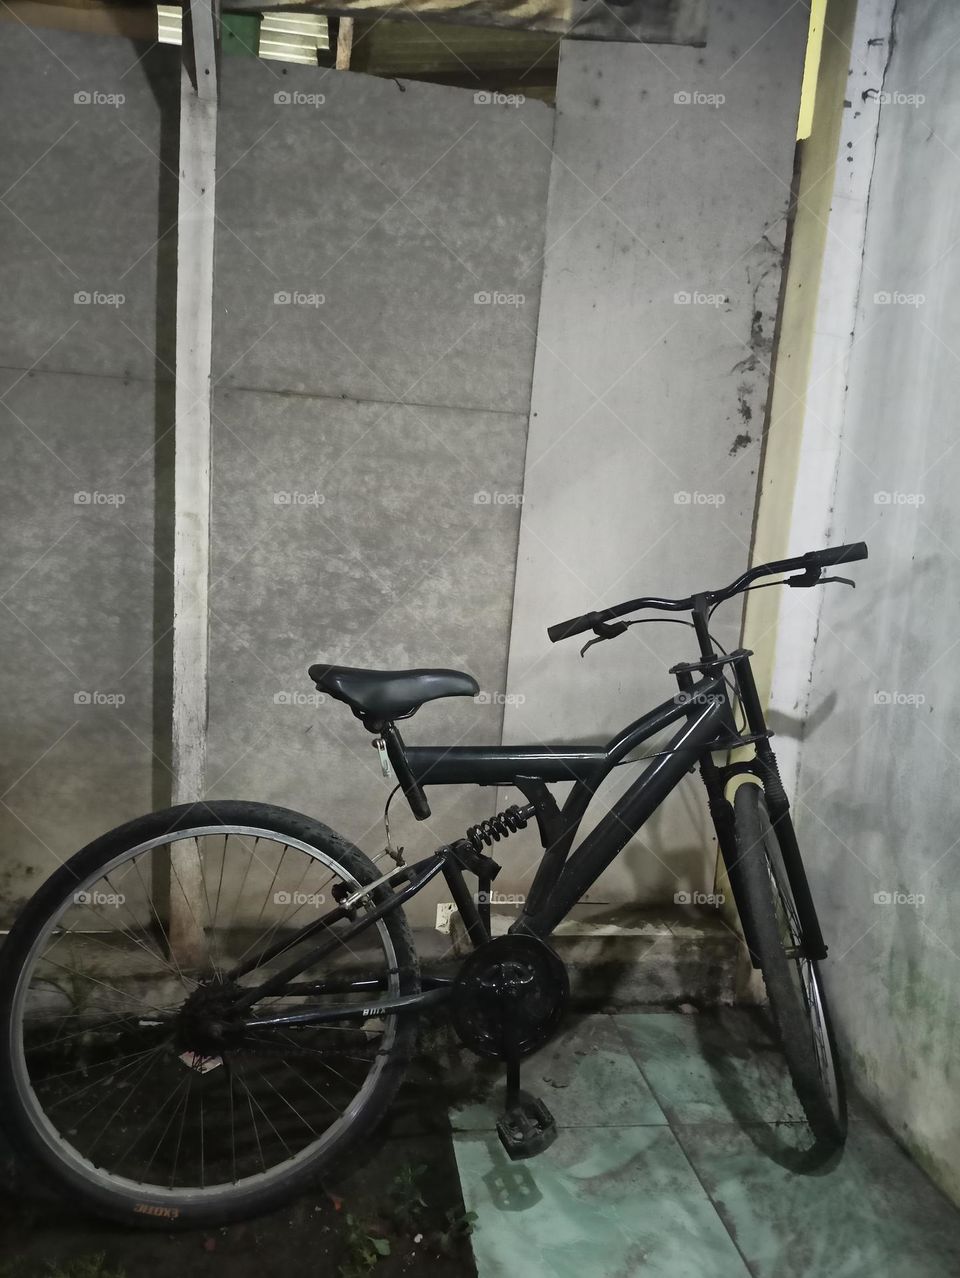 Simple bike in the black color